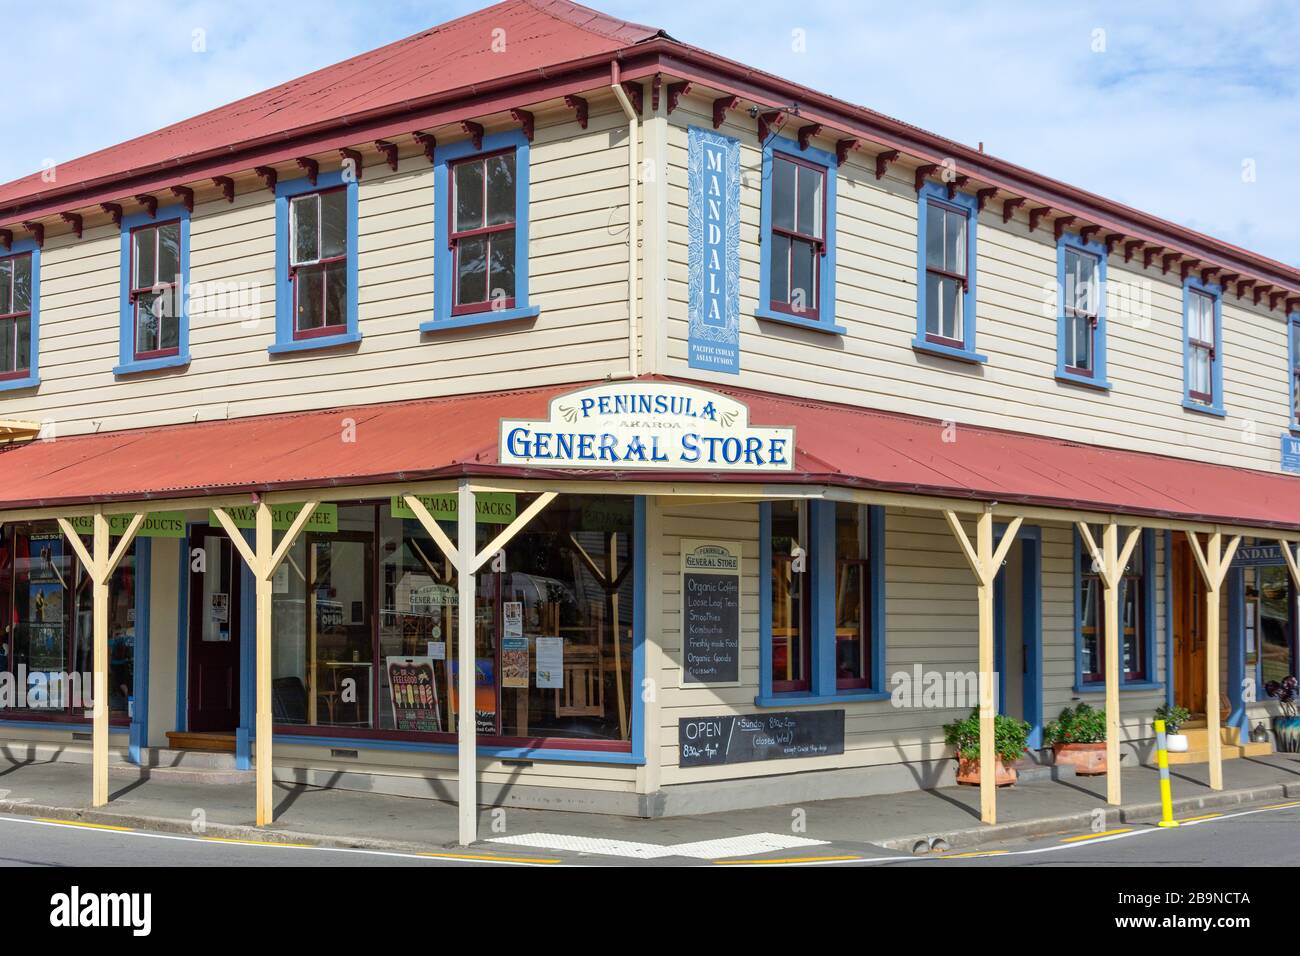 Akaroa Peninsula General Store, Rue Lavaud, Akaroa, Banks Peninsula, Canterbury Region, New Zealand Stock Photo